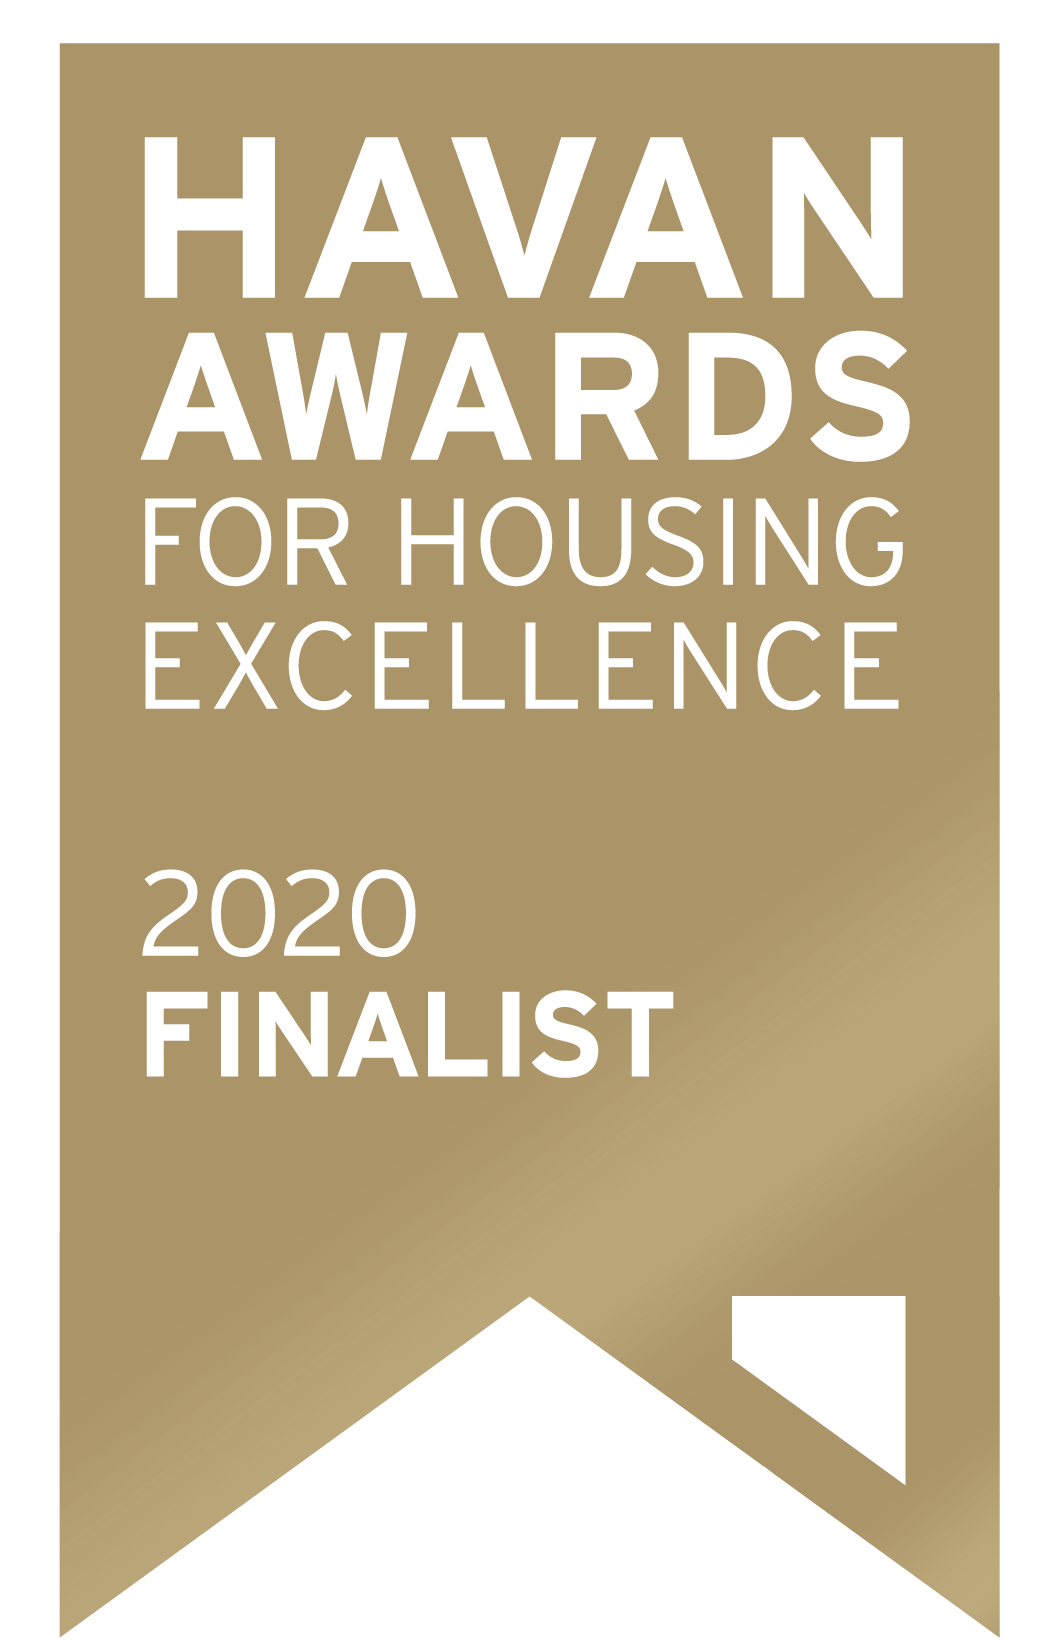 HAVAN Awards For Housing Excellence 2020 Finalist